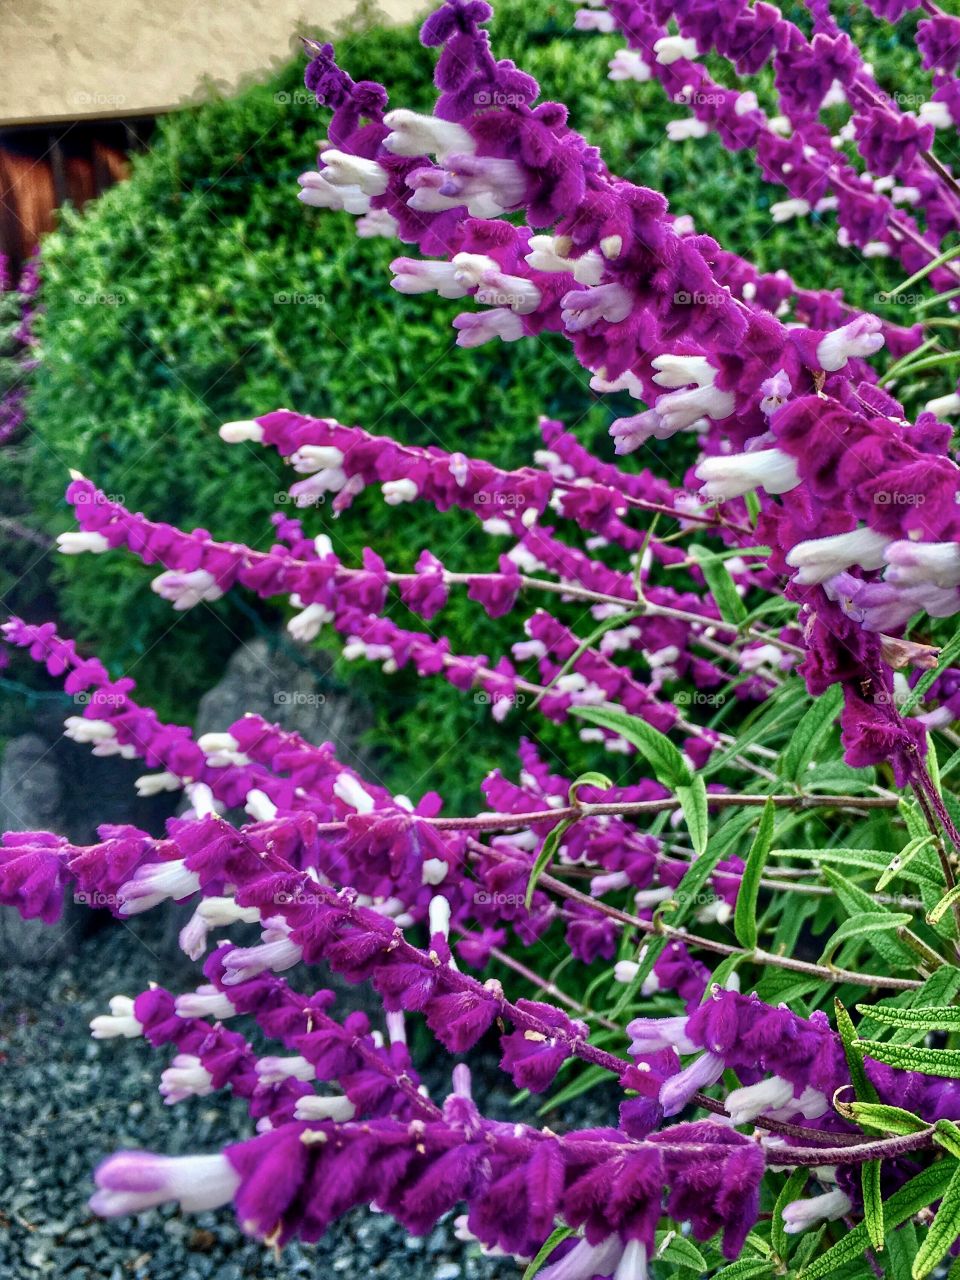 Soft fuzzy purple flower bush loved by hummingbirds. 